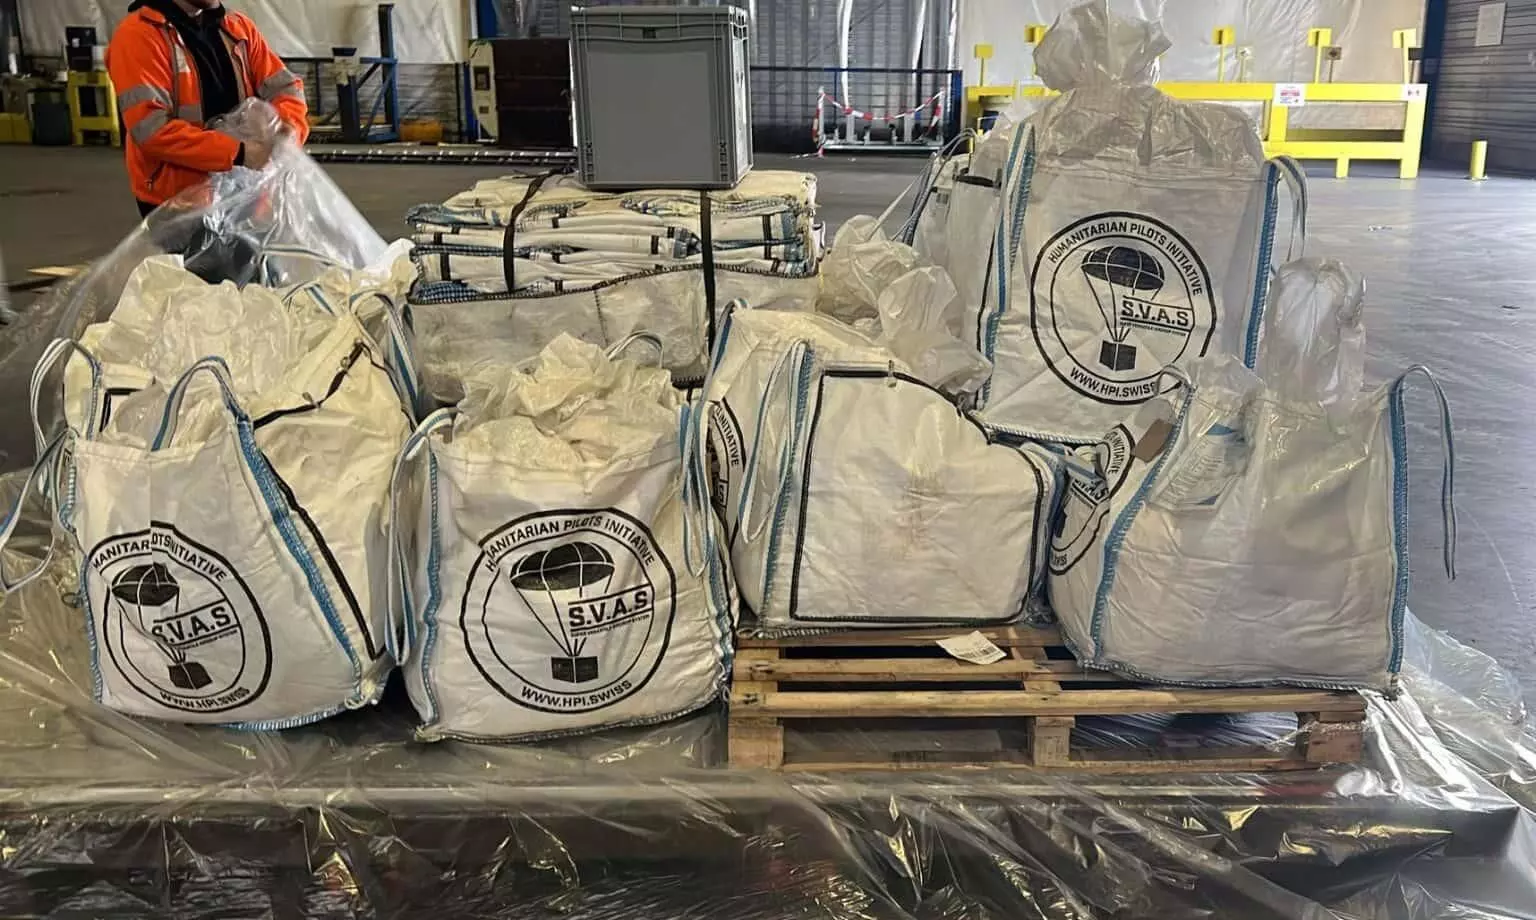 Magma, HPI deliver life-saving cargo to South Sudan